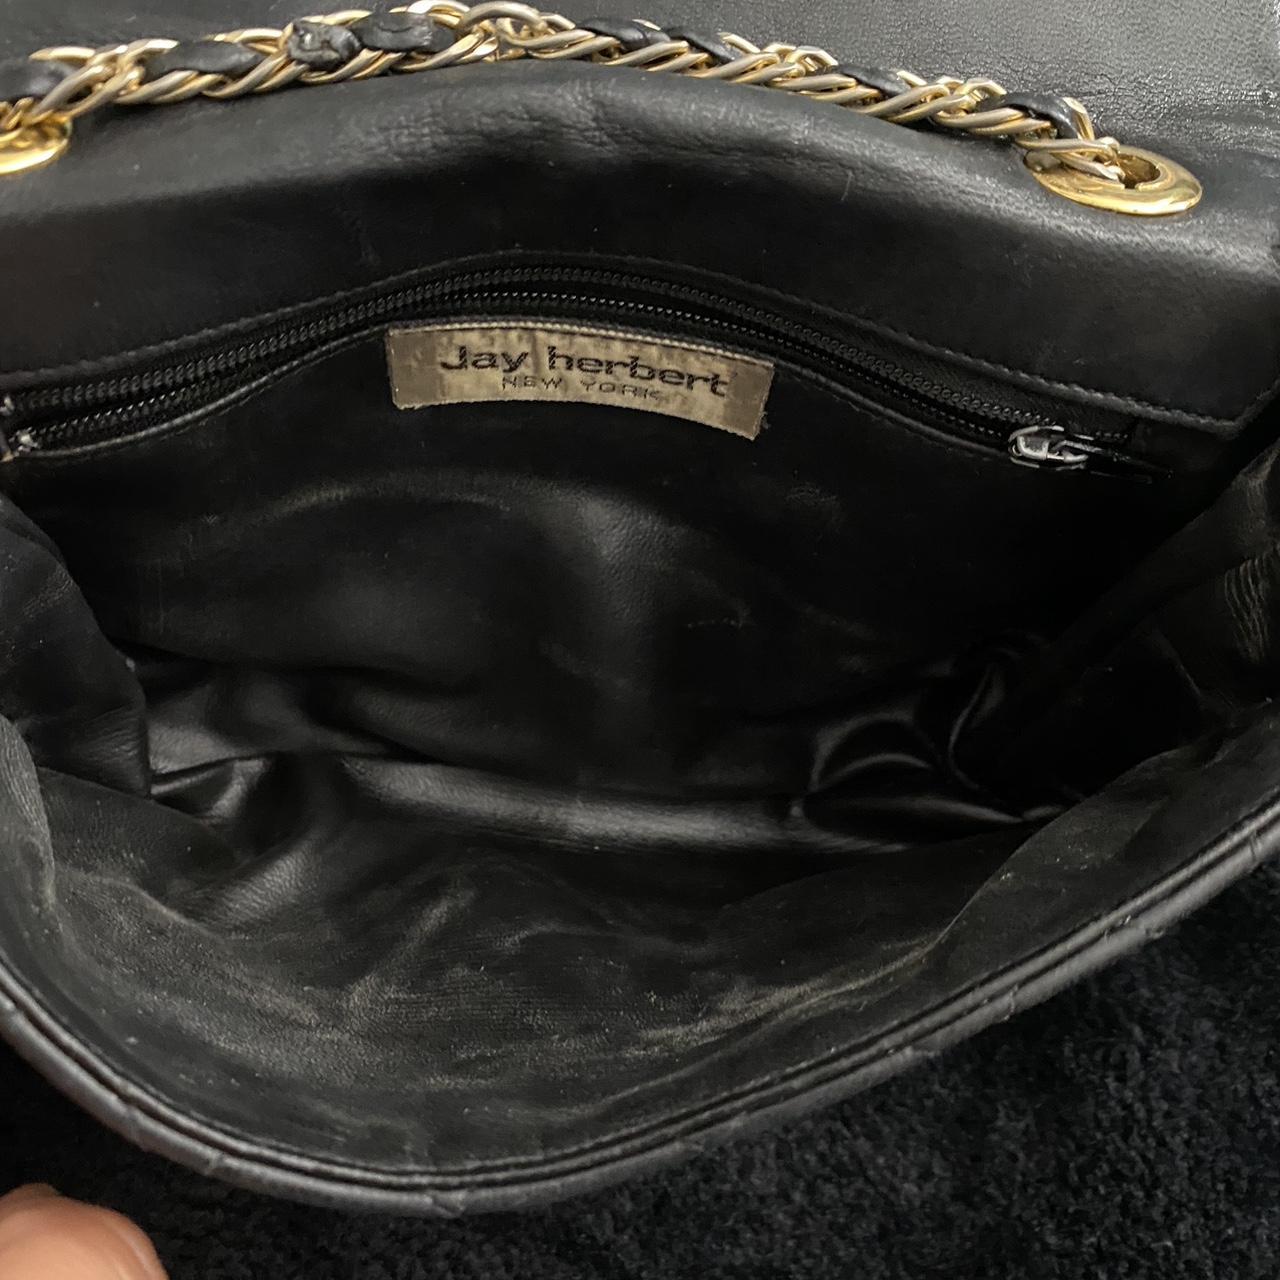 Vintage Jay Herbert New York leather mini flap